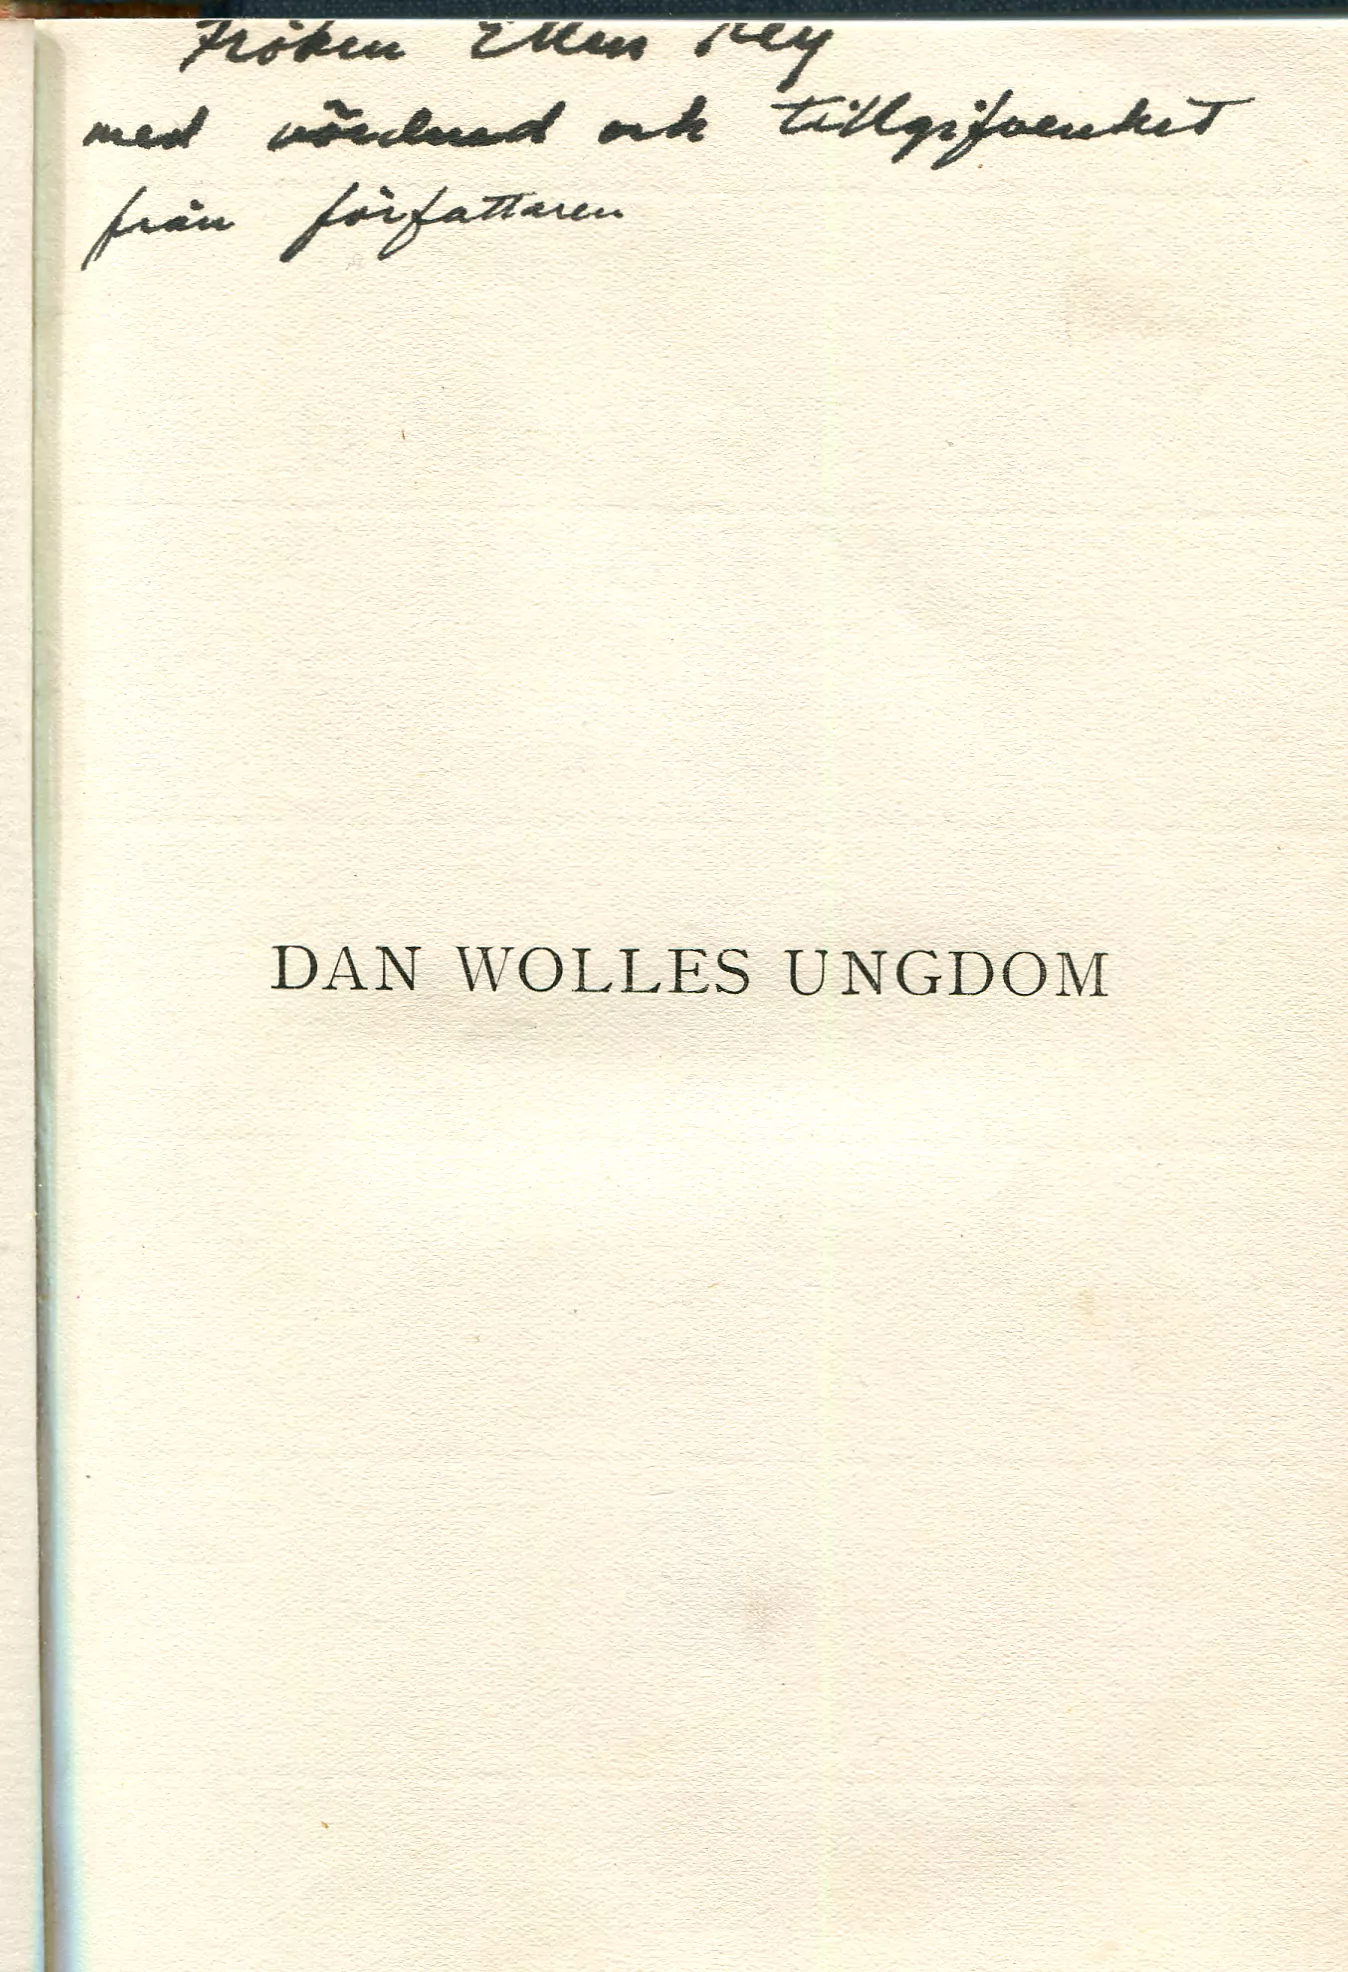 Dan Wolles ungdom , Stockholm 1917